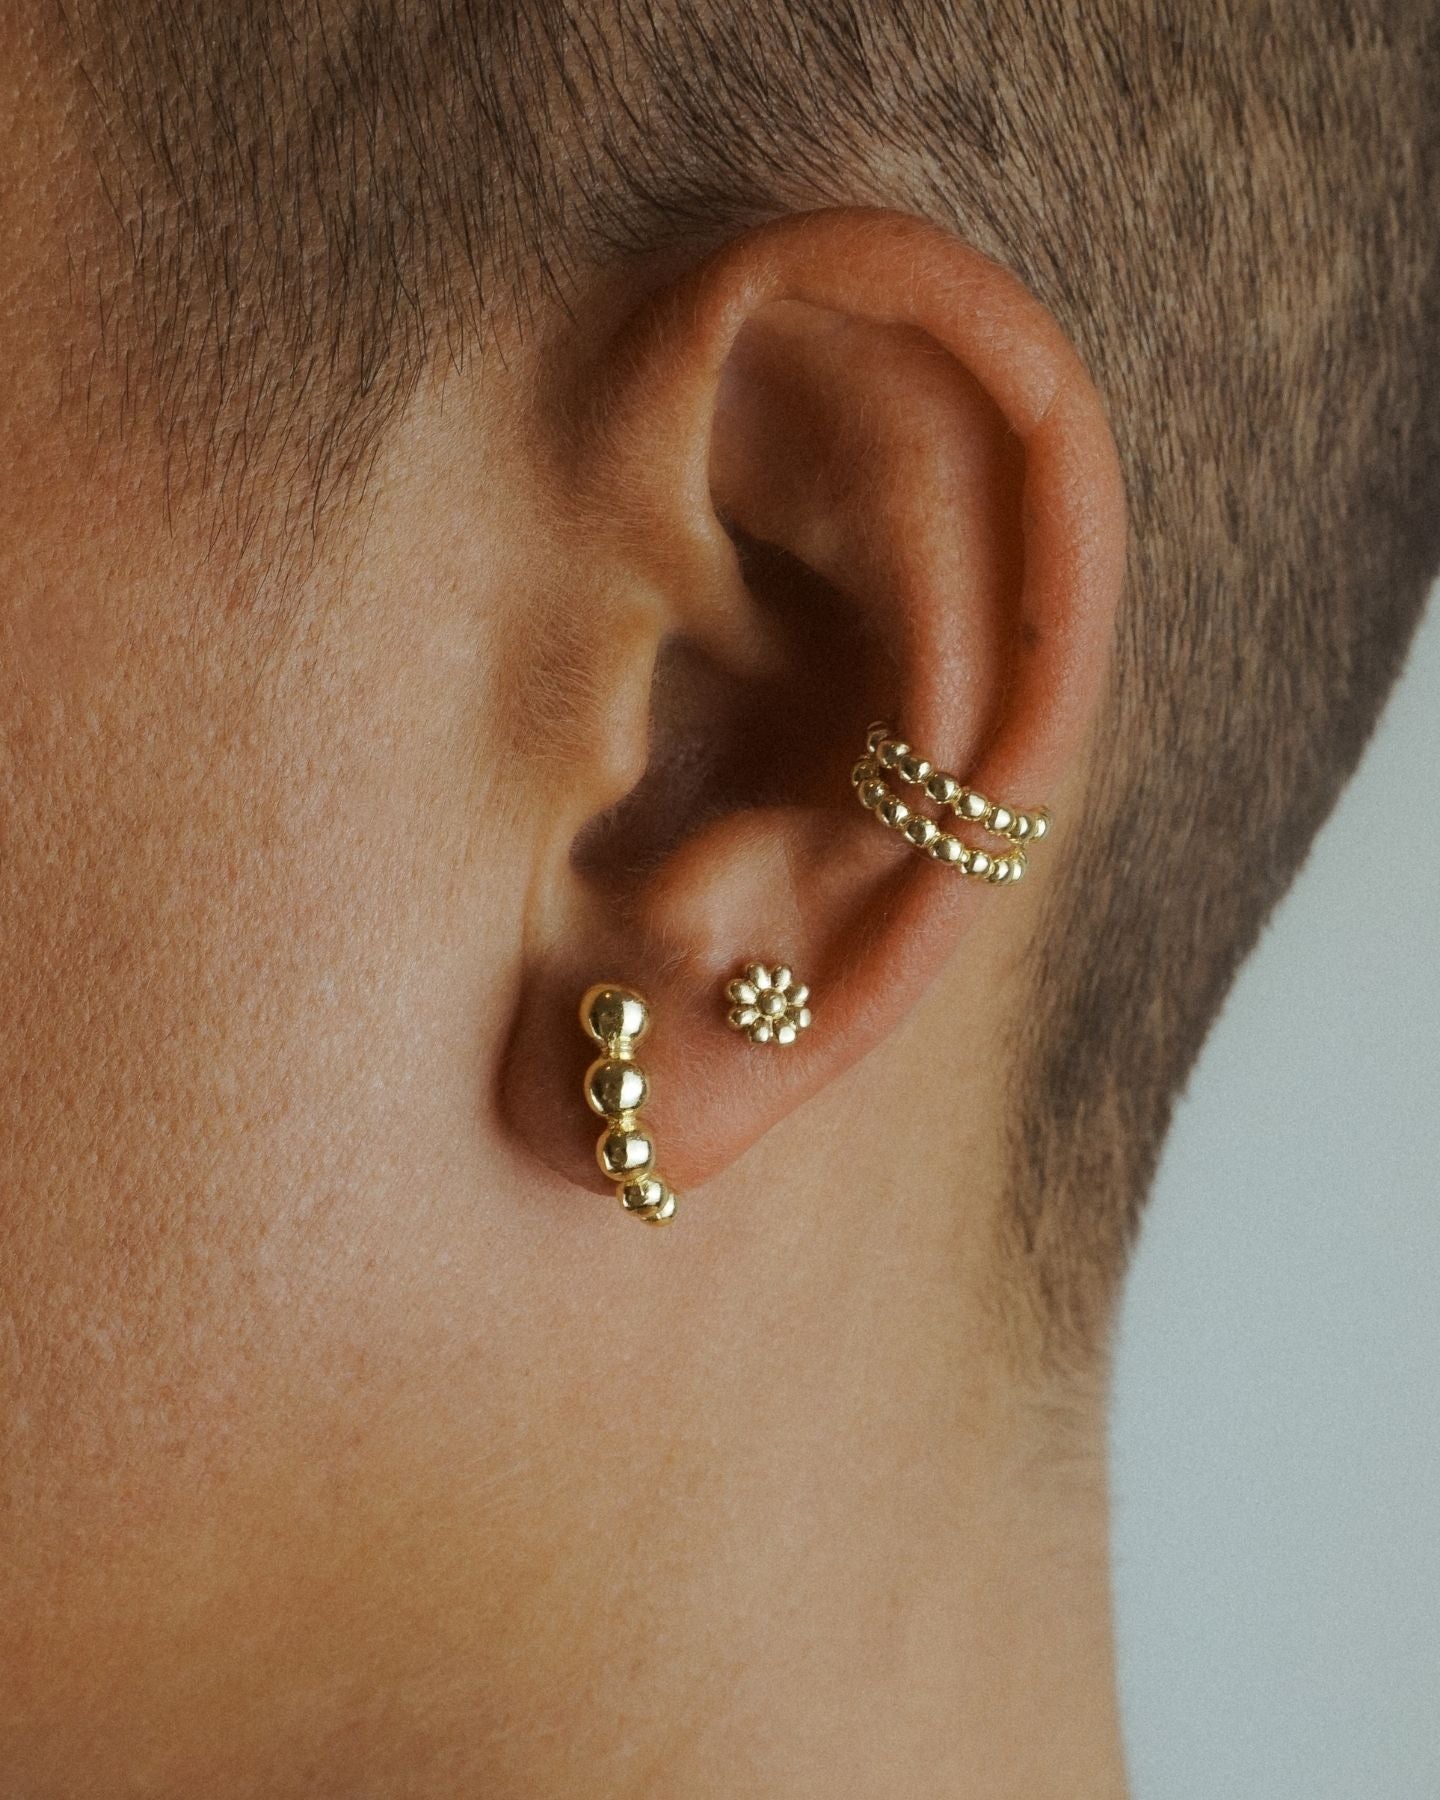 Brilliant Beads Ear Stud Gold